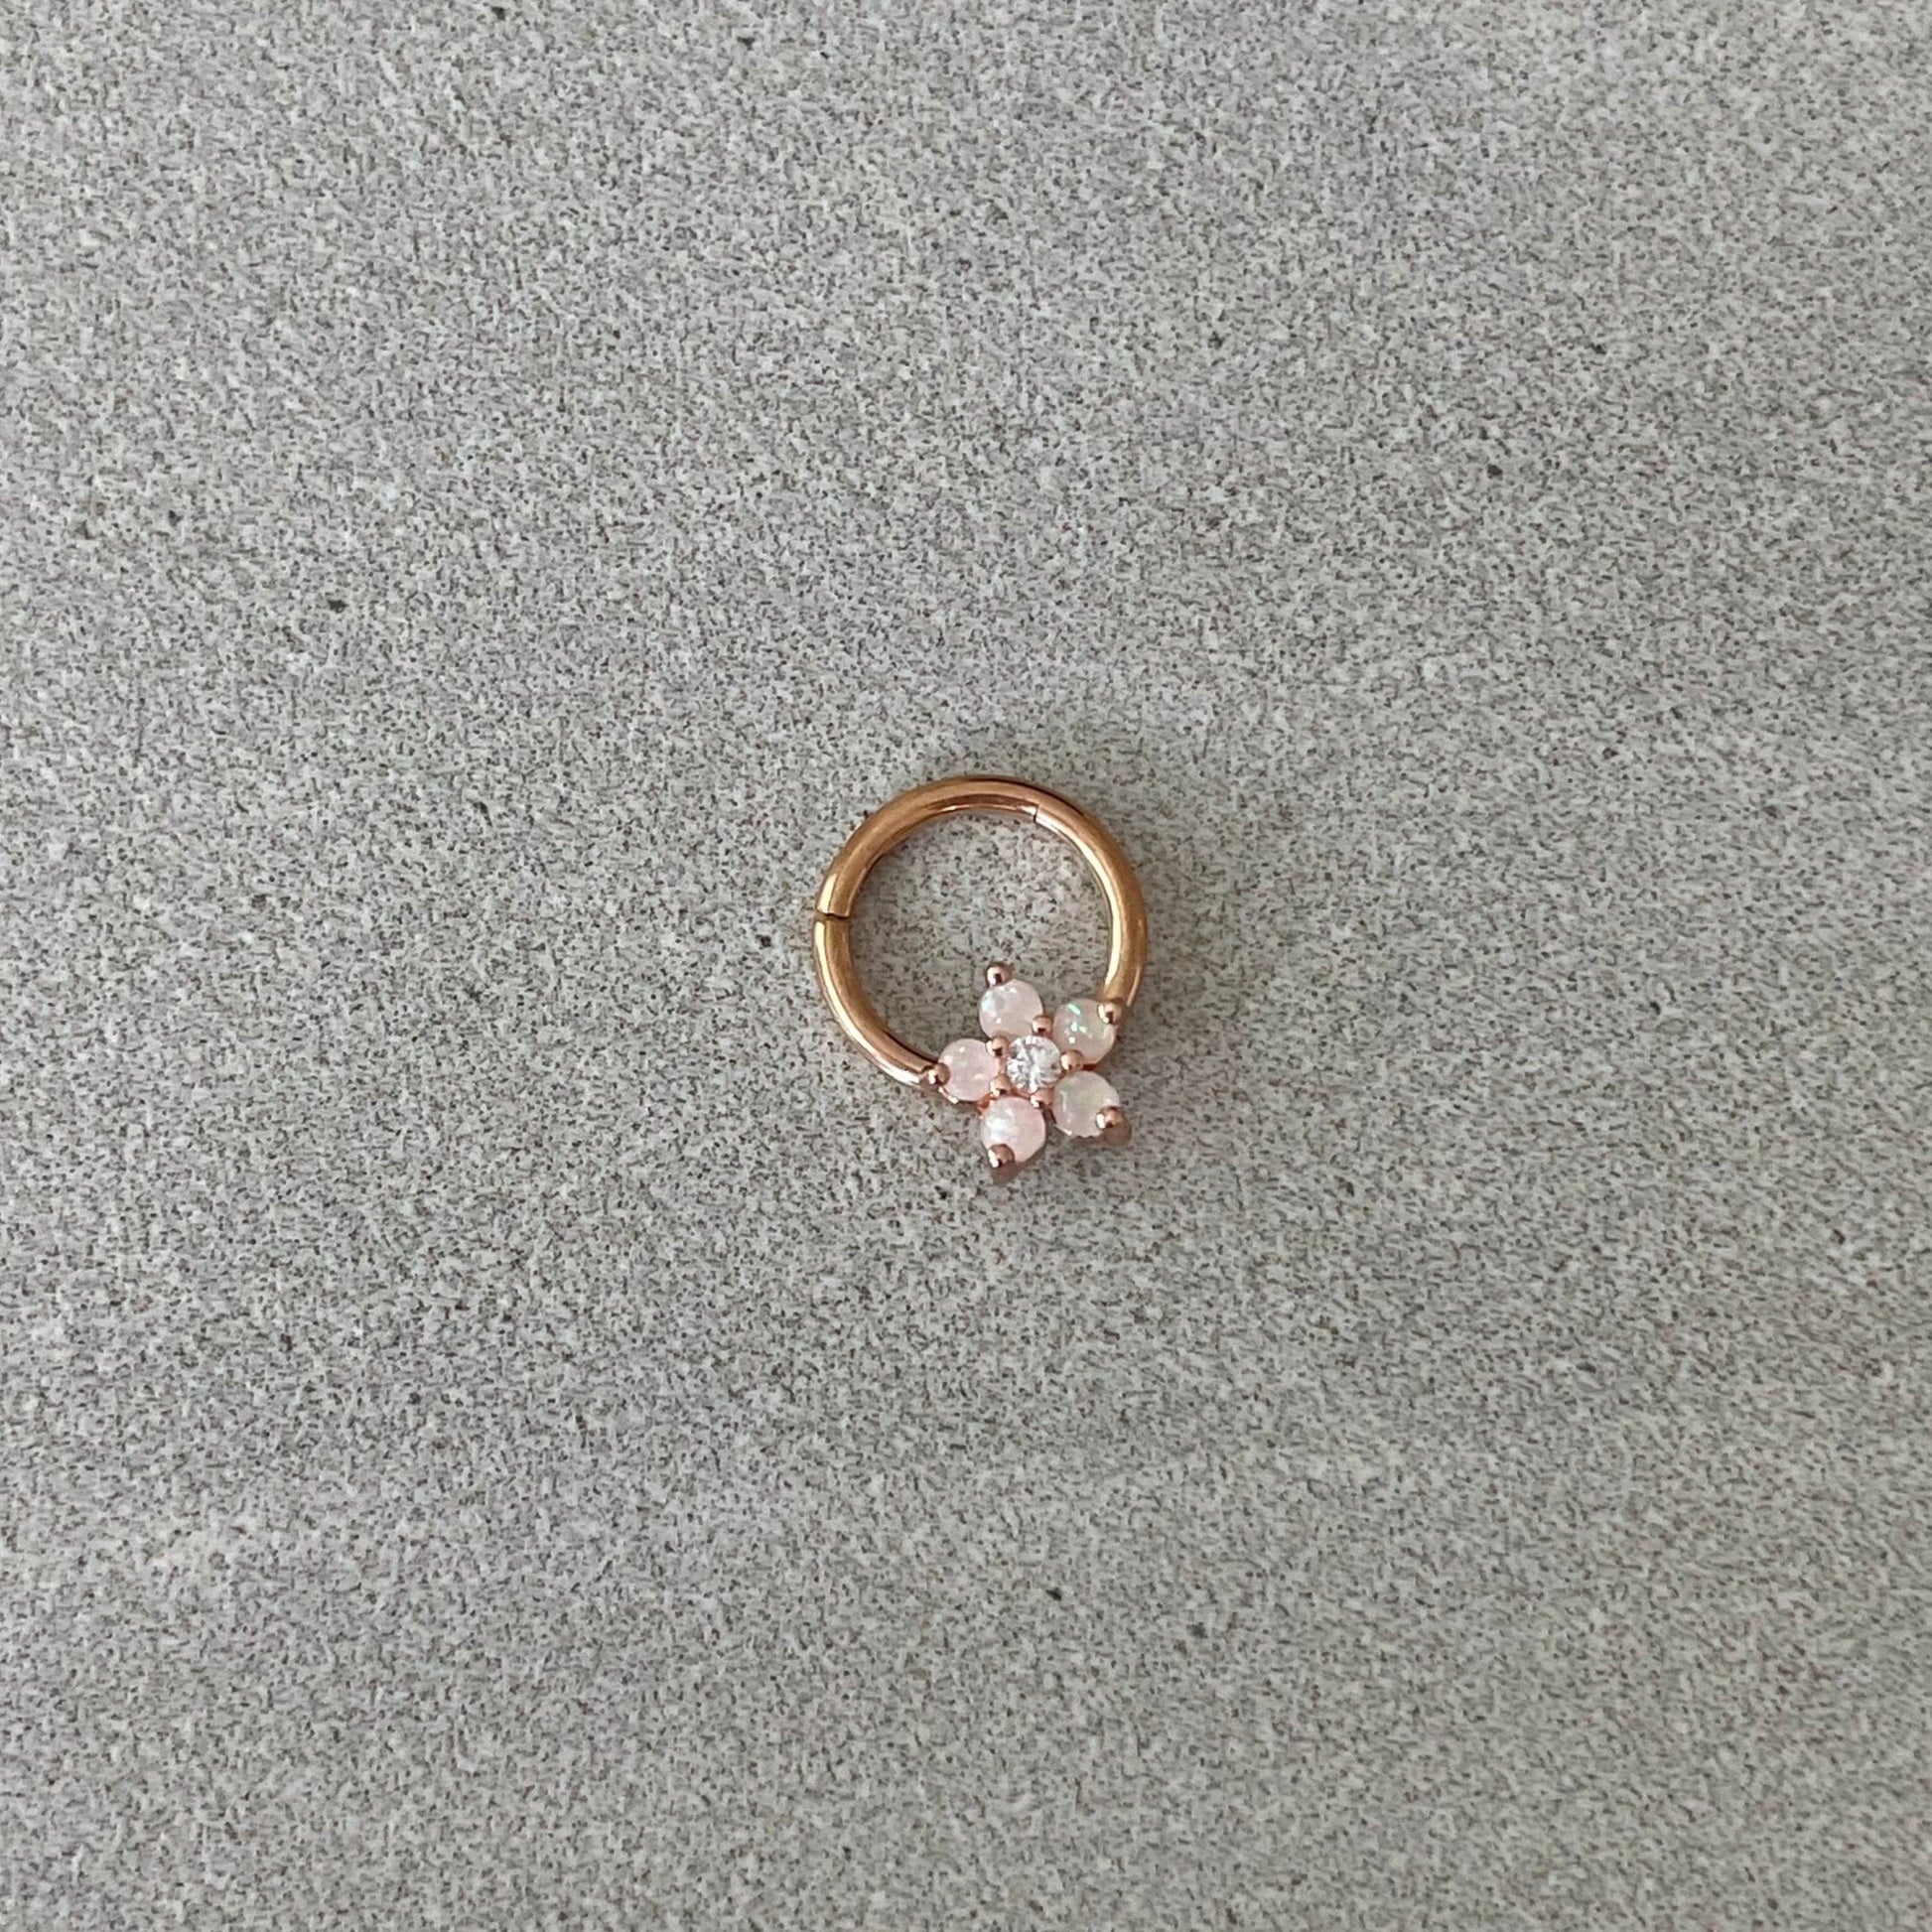 Rose Gold Opal Flower Daith Earring (16G, 8mm, Surgical Steel)